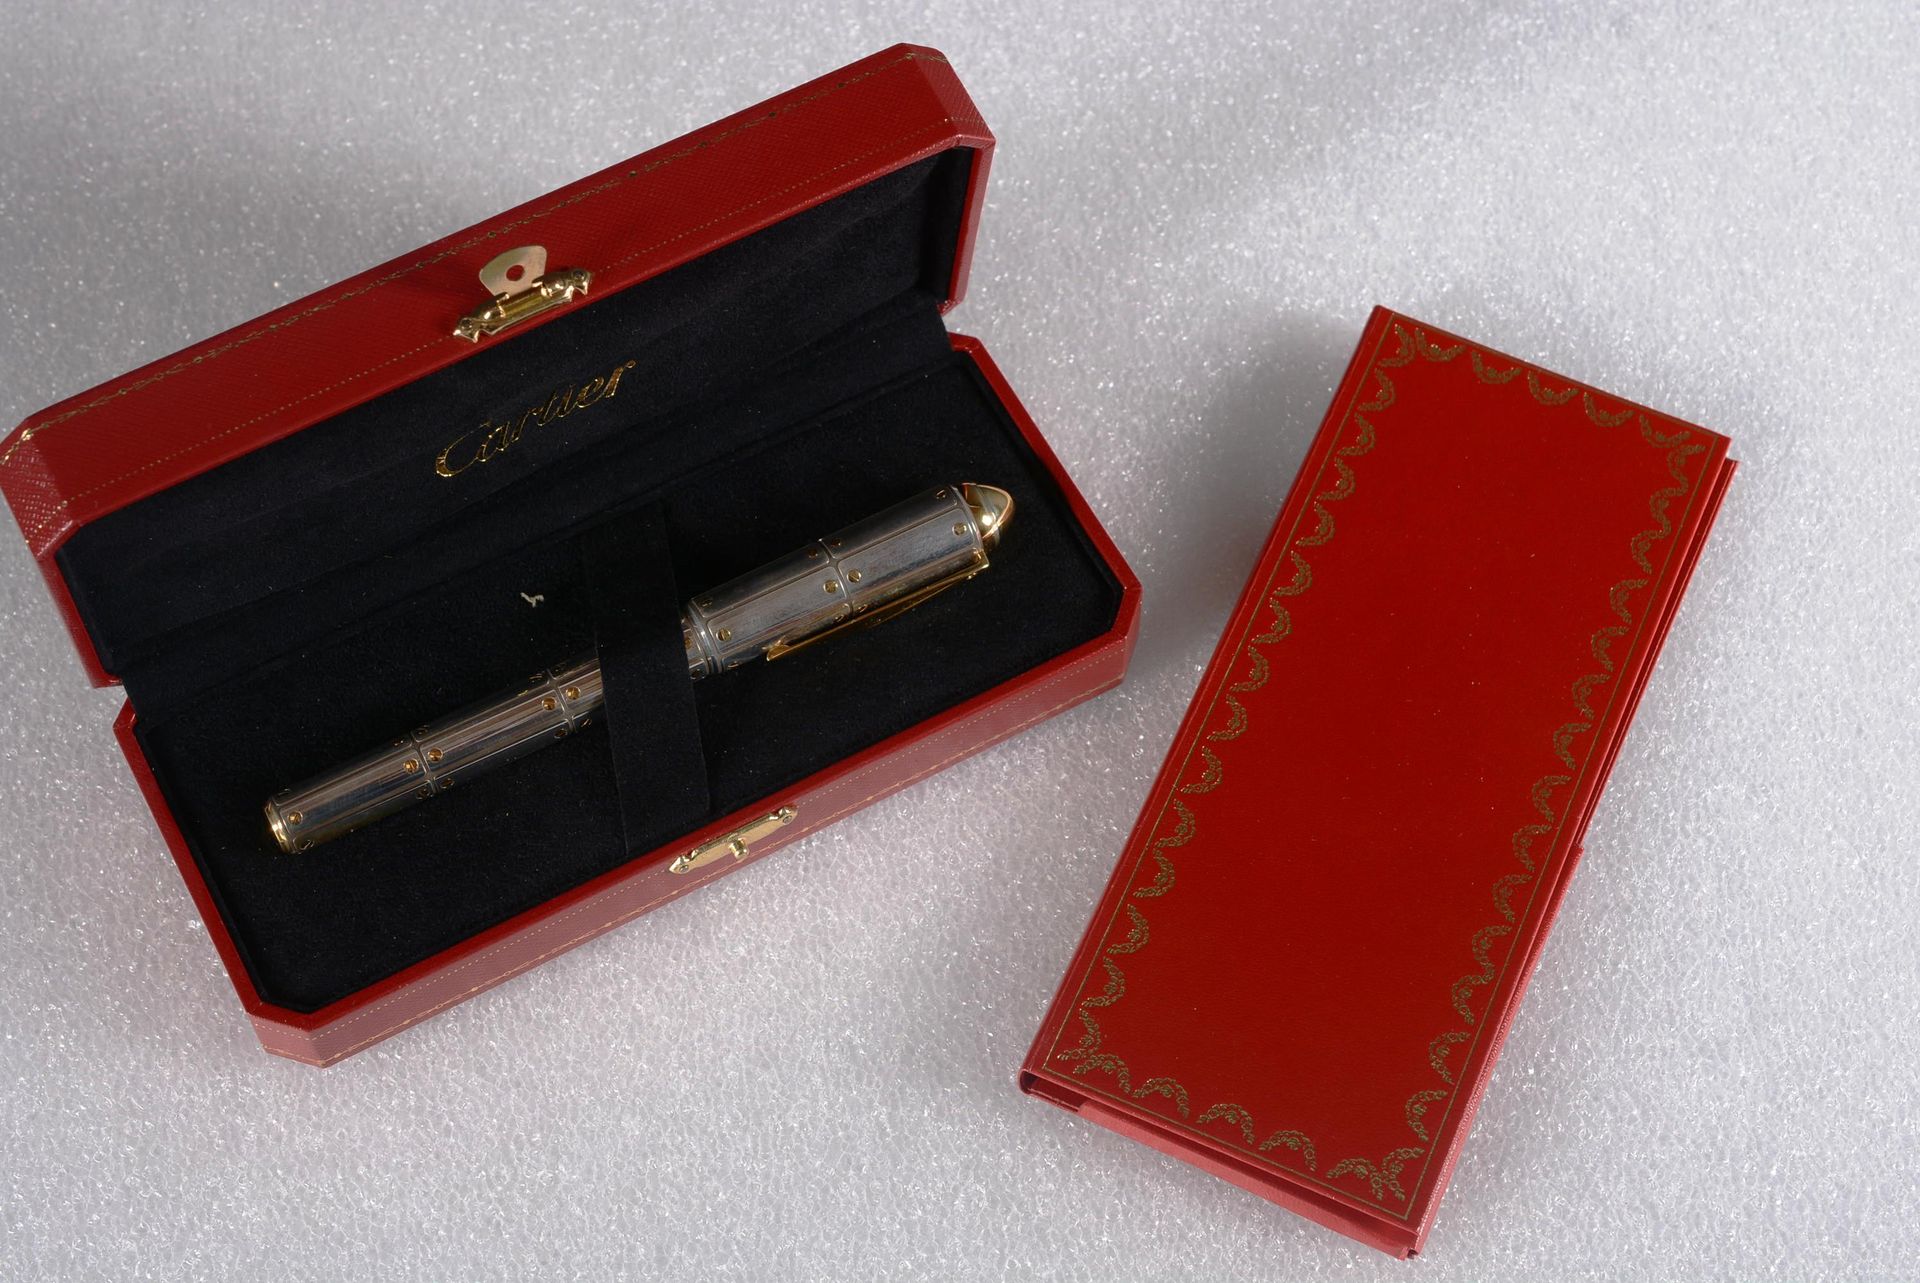 CARTIER. Stylo plume 卡地亚。

电镀金属钢笔，限量生产，编号为0378/1904